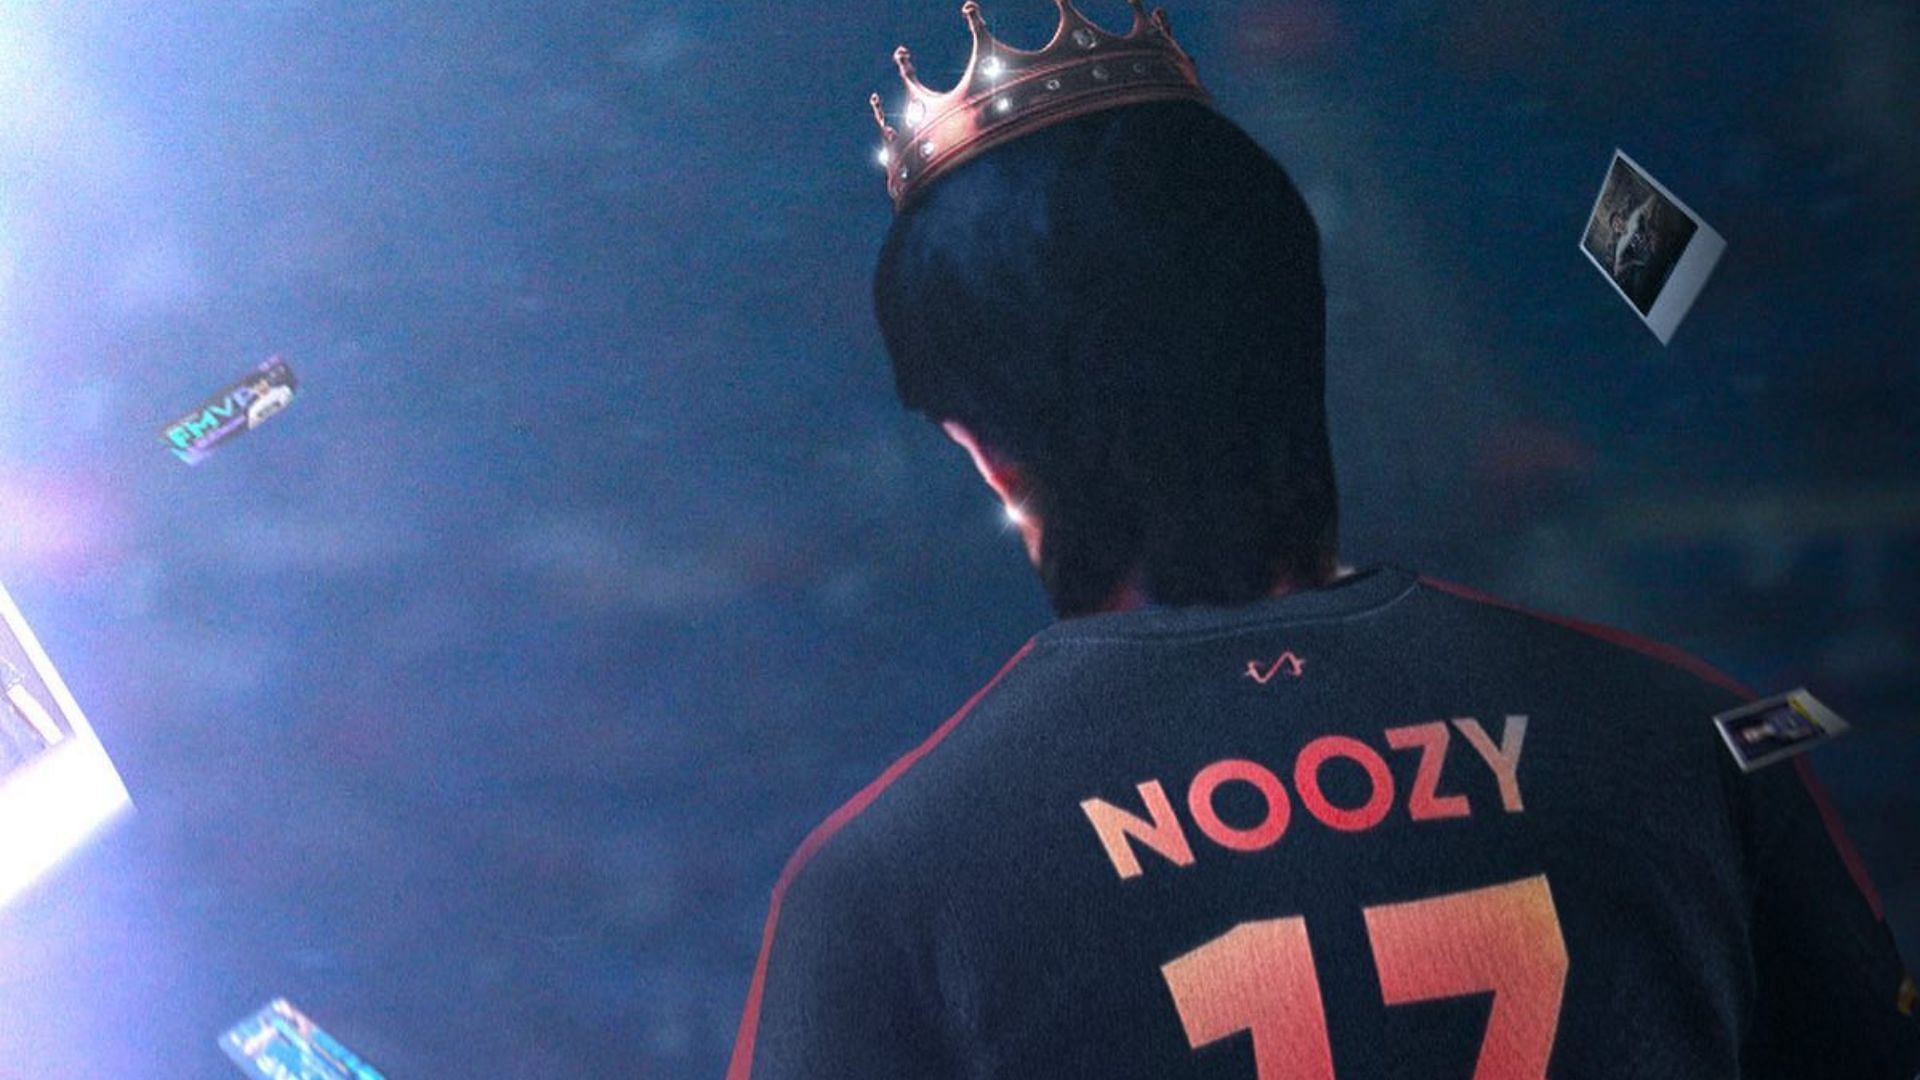 Noozy left The Infinity (image via Sportskeeda)